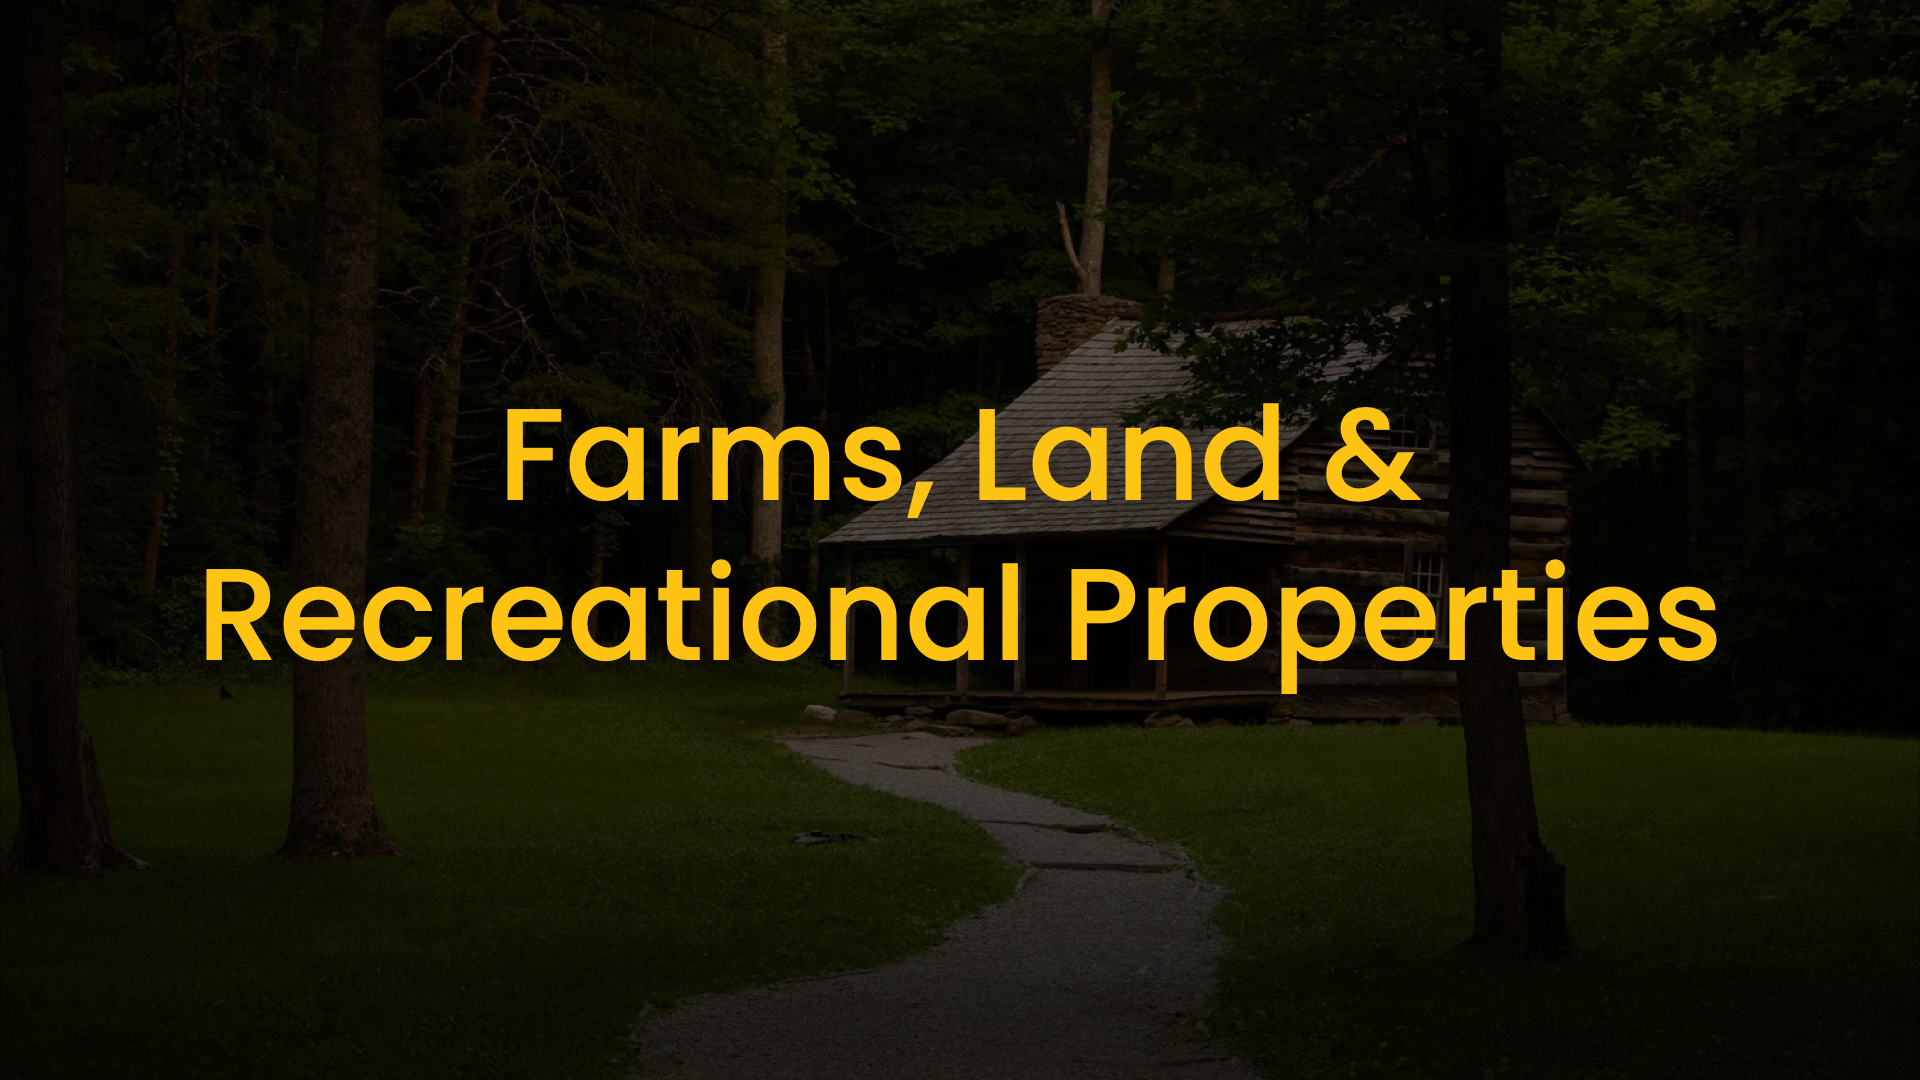 Farms, Land & Recreational Properties Thumbnail Corrected.png